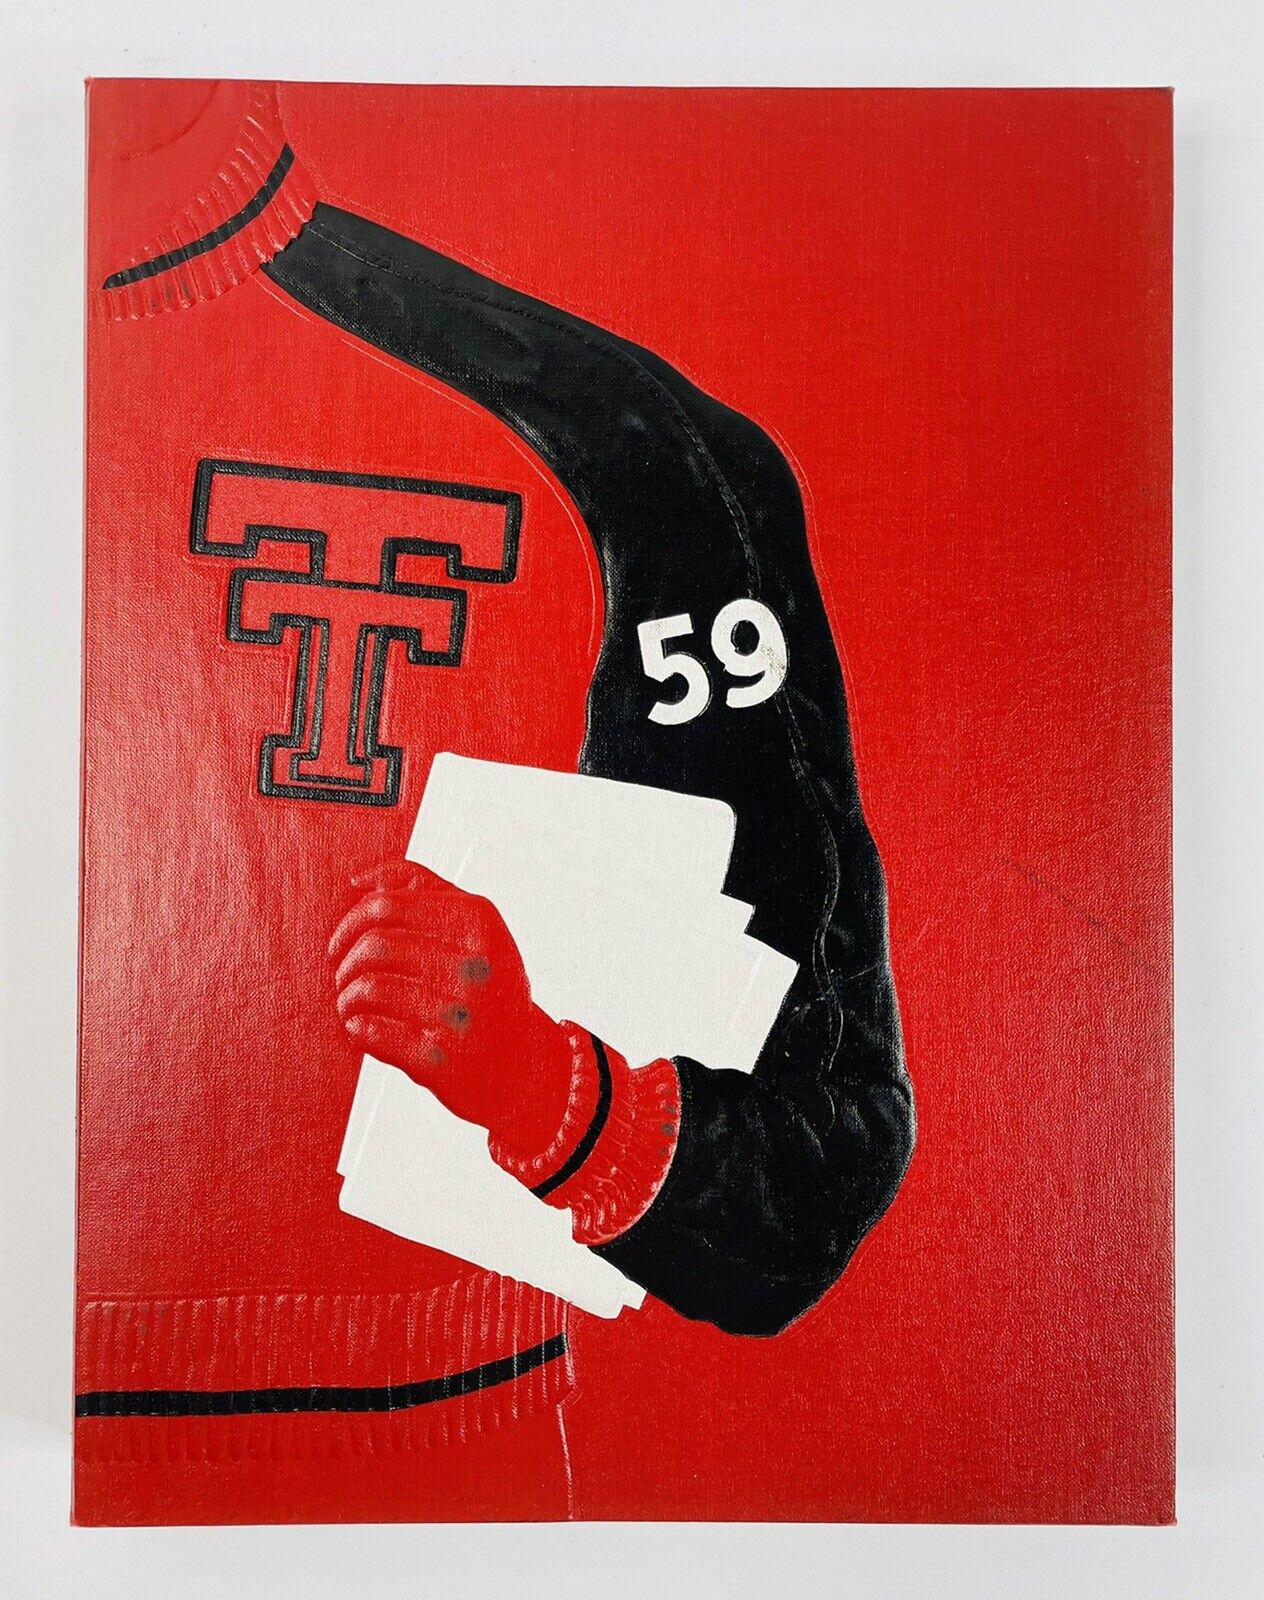 Vintage College Yearbook - Texas Tech University LA VENTANA 1959